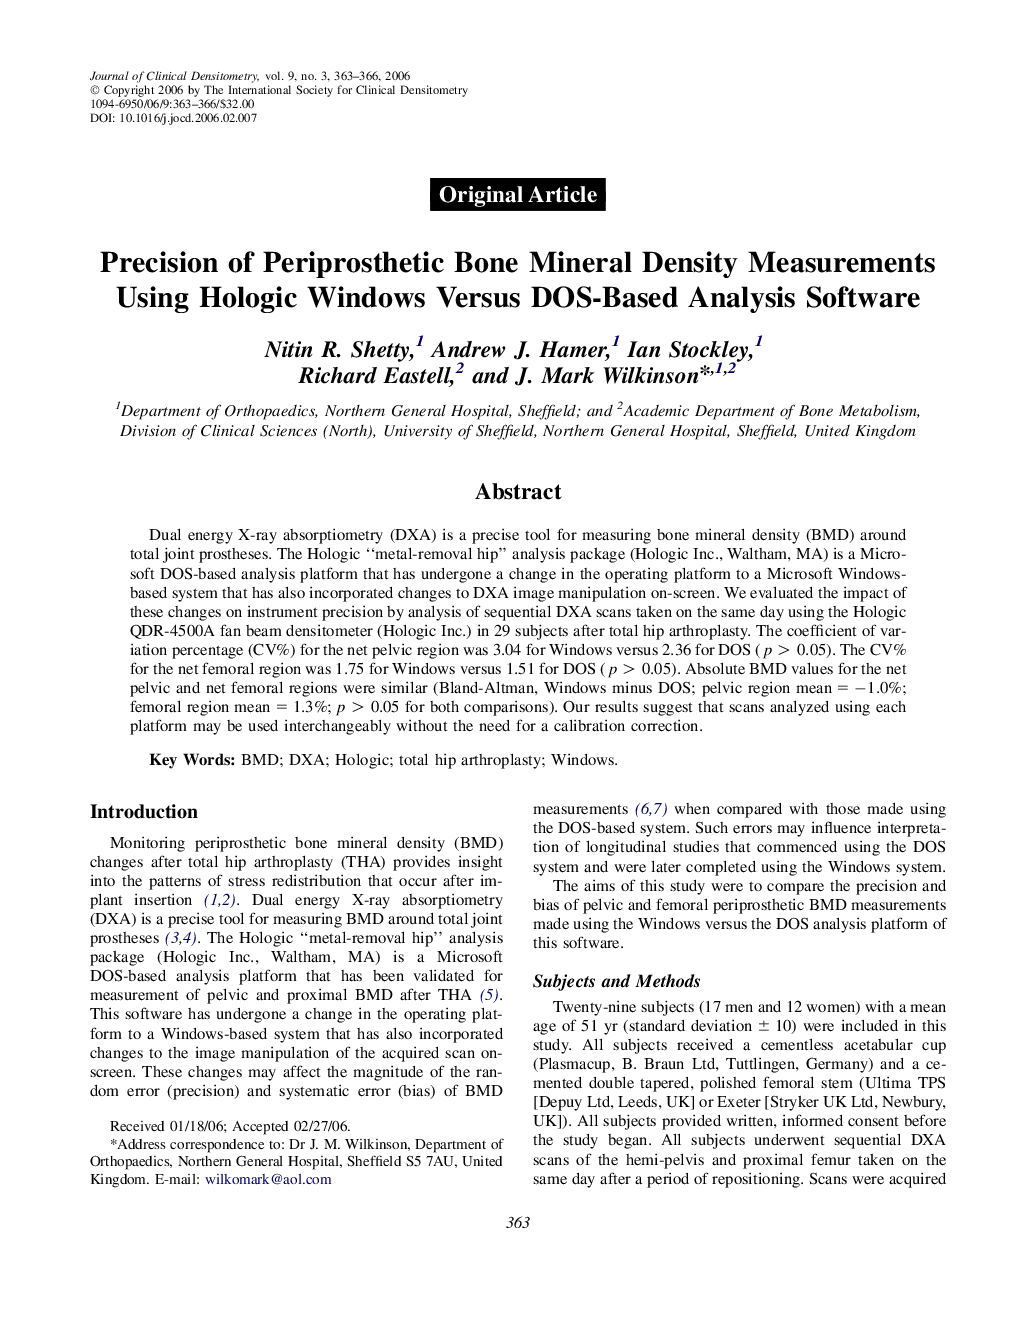 Precision of Periprosthetic Bone Mineral Density Measurements Using Hologic Windows Versus DOS-Based Analysis Software